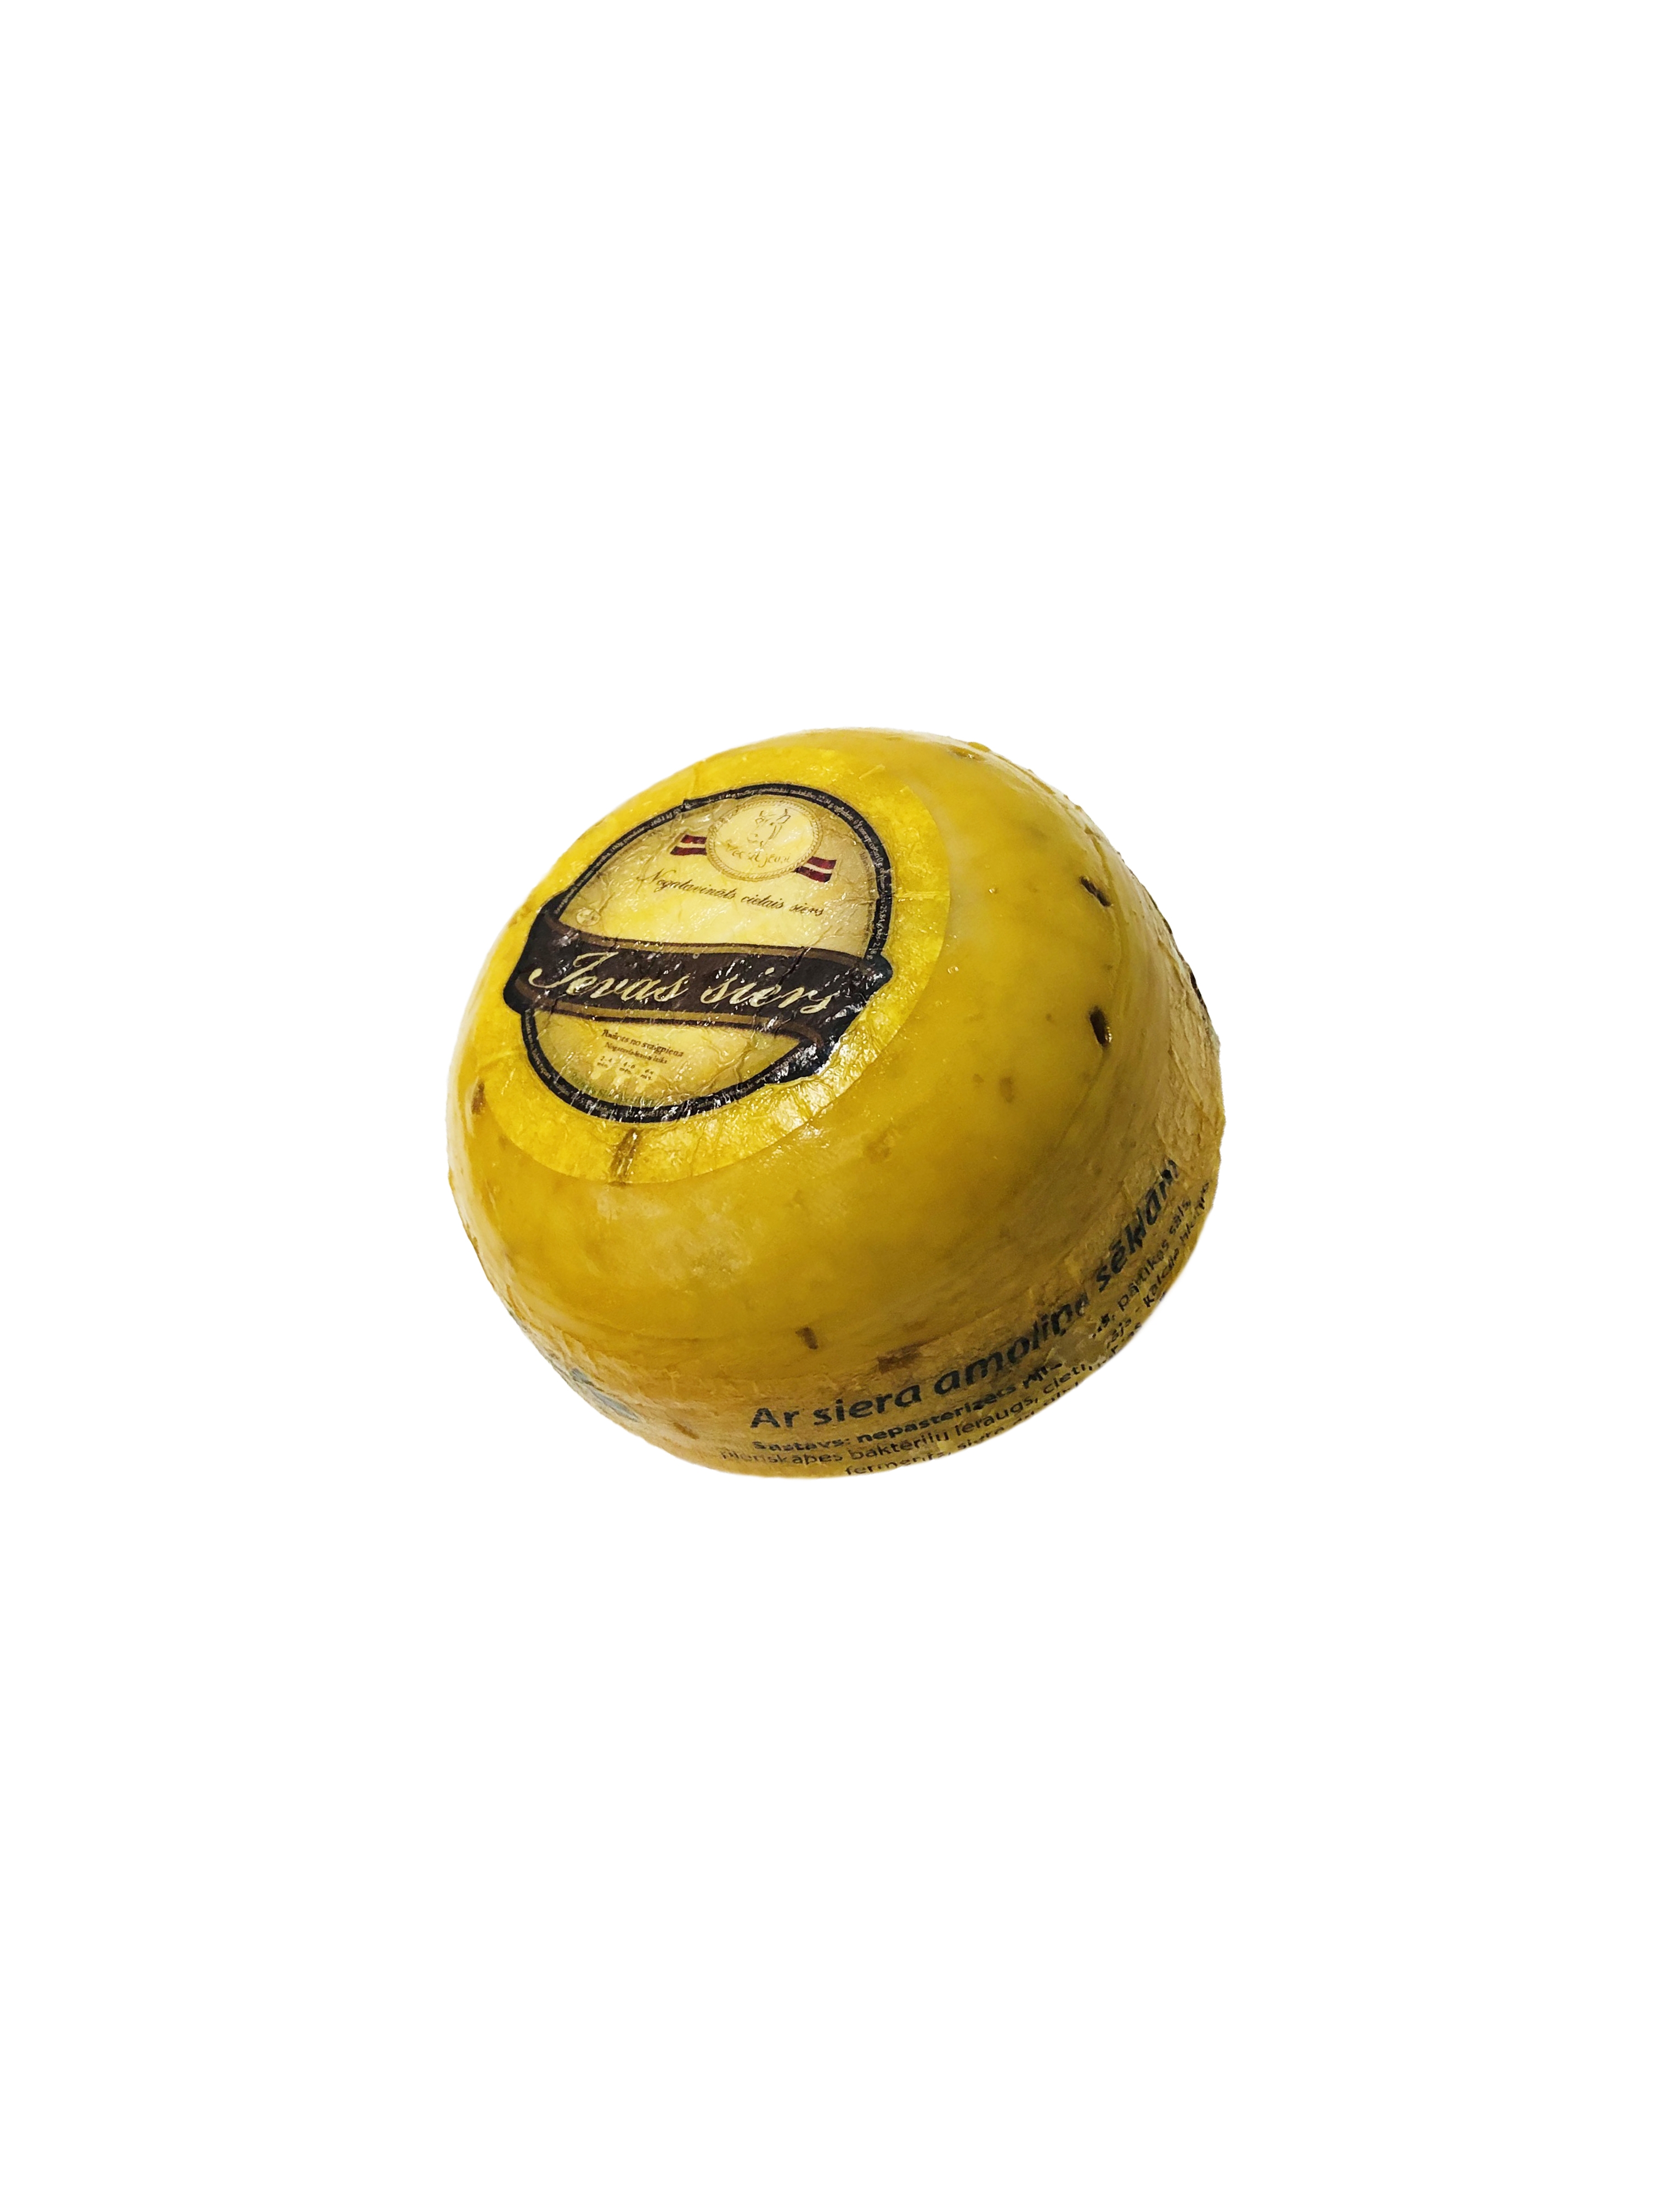 Siers, Ievas siers ar siera amoliņu sēklām 2-4 mēn., 500g